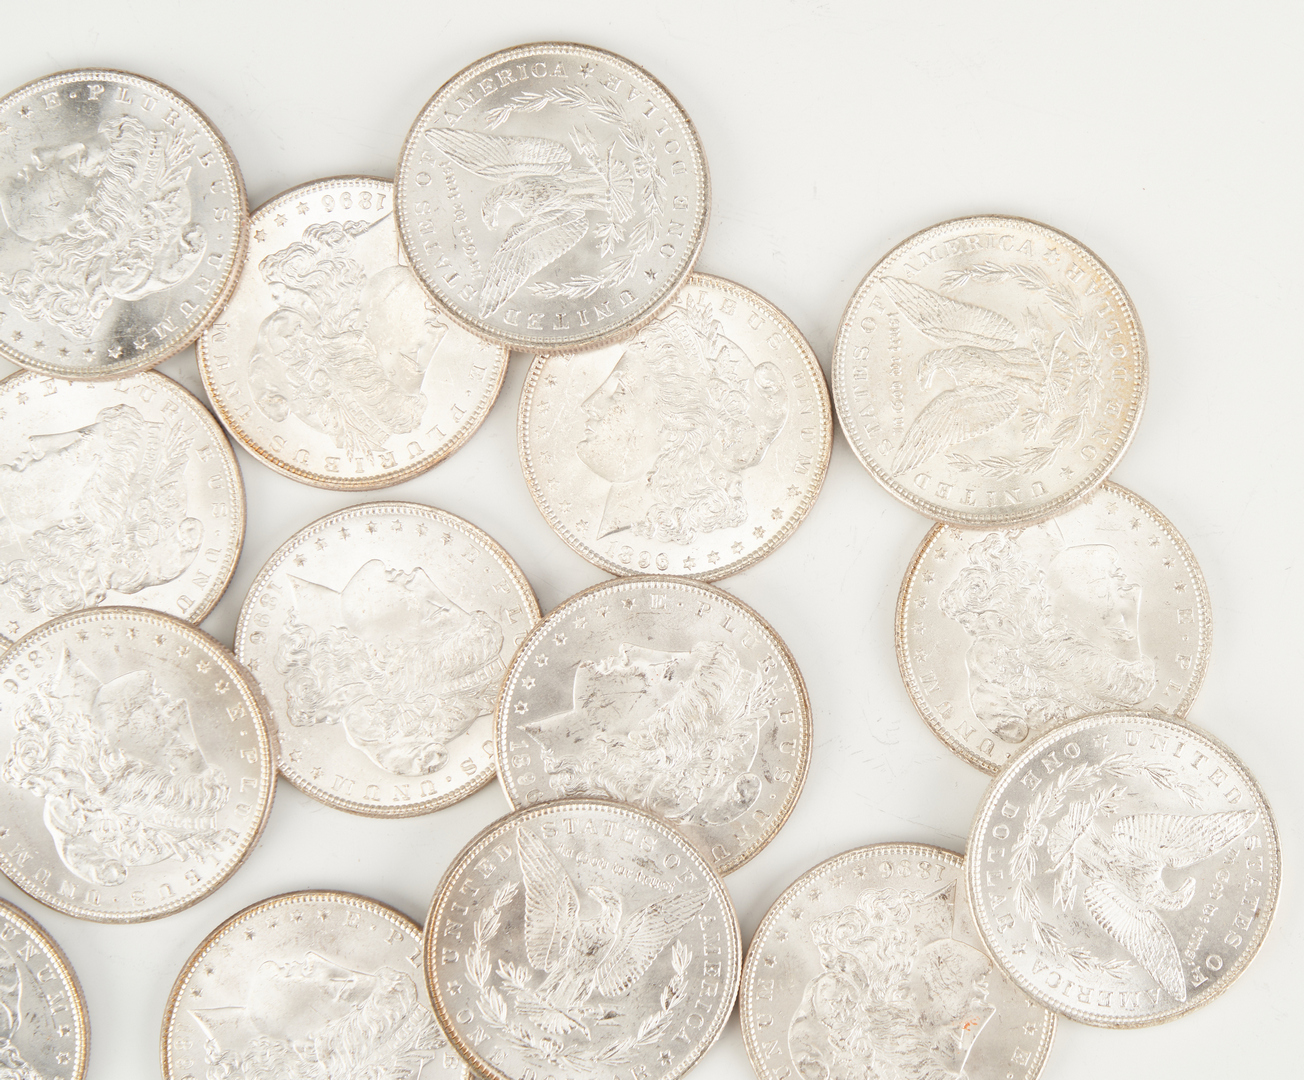 Lot 746: UNC Roll of Morgan Silver Dollars, #3, 1896